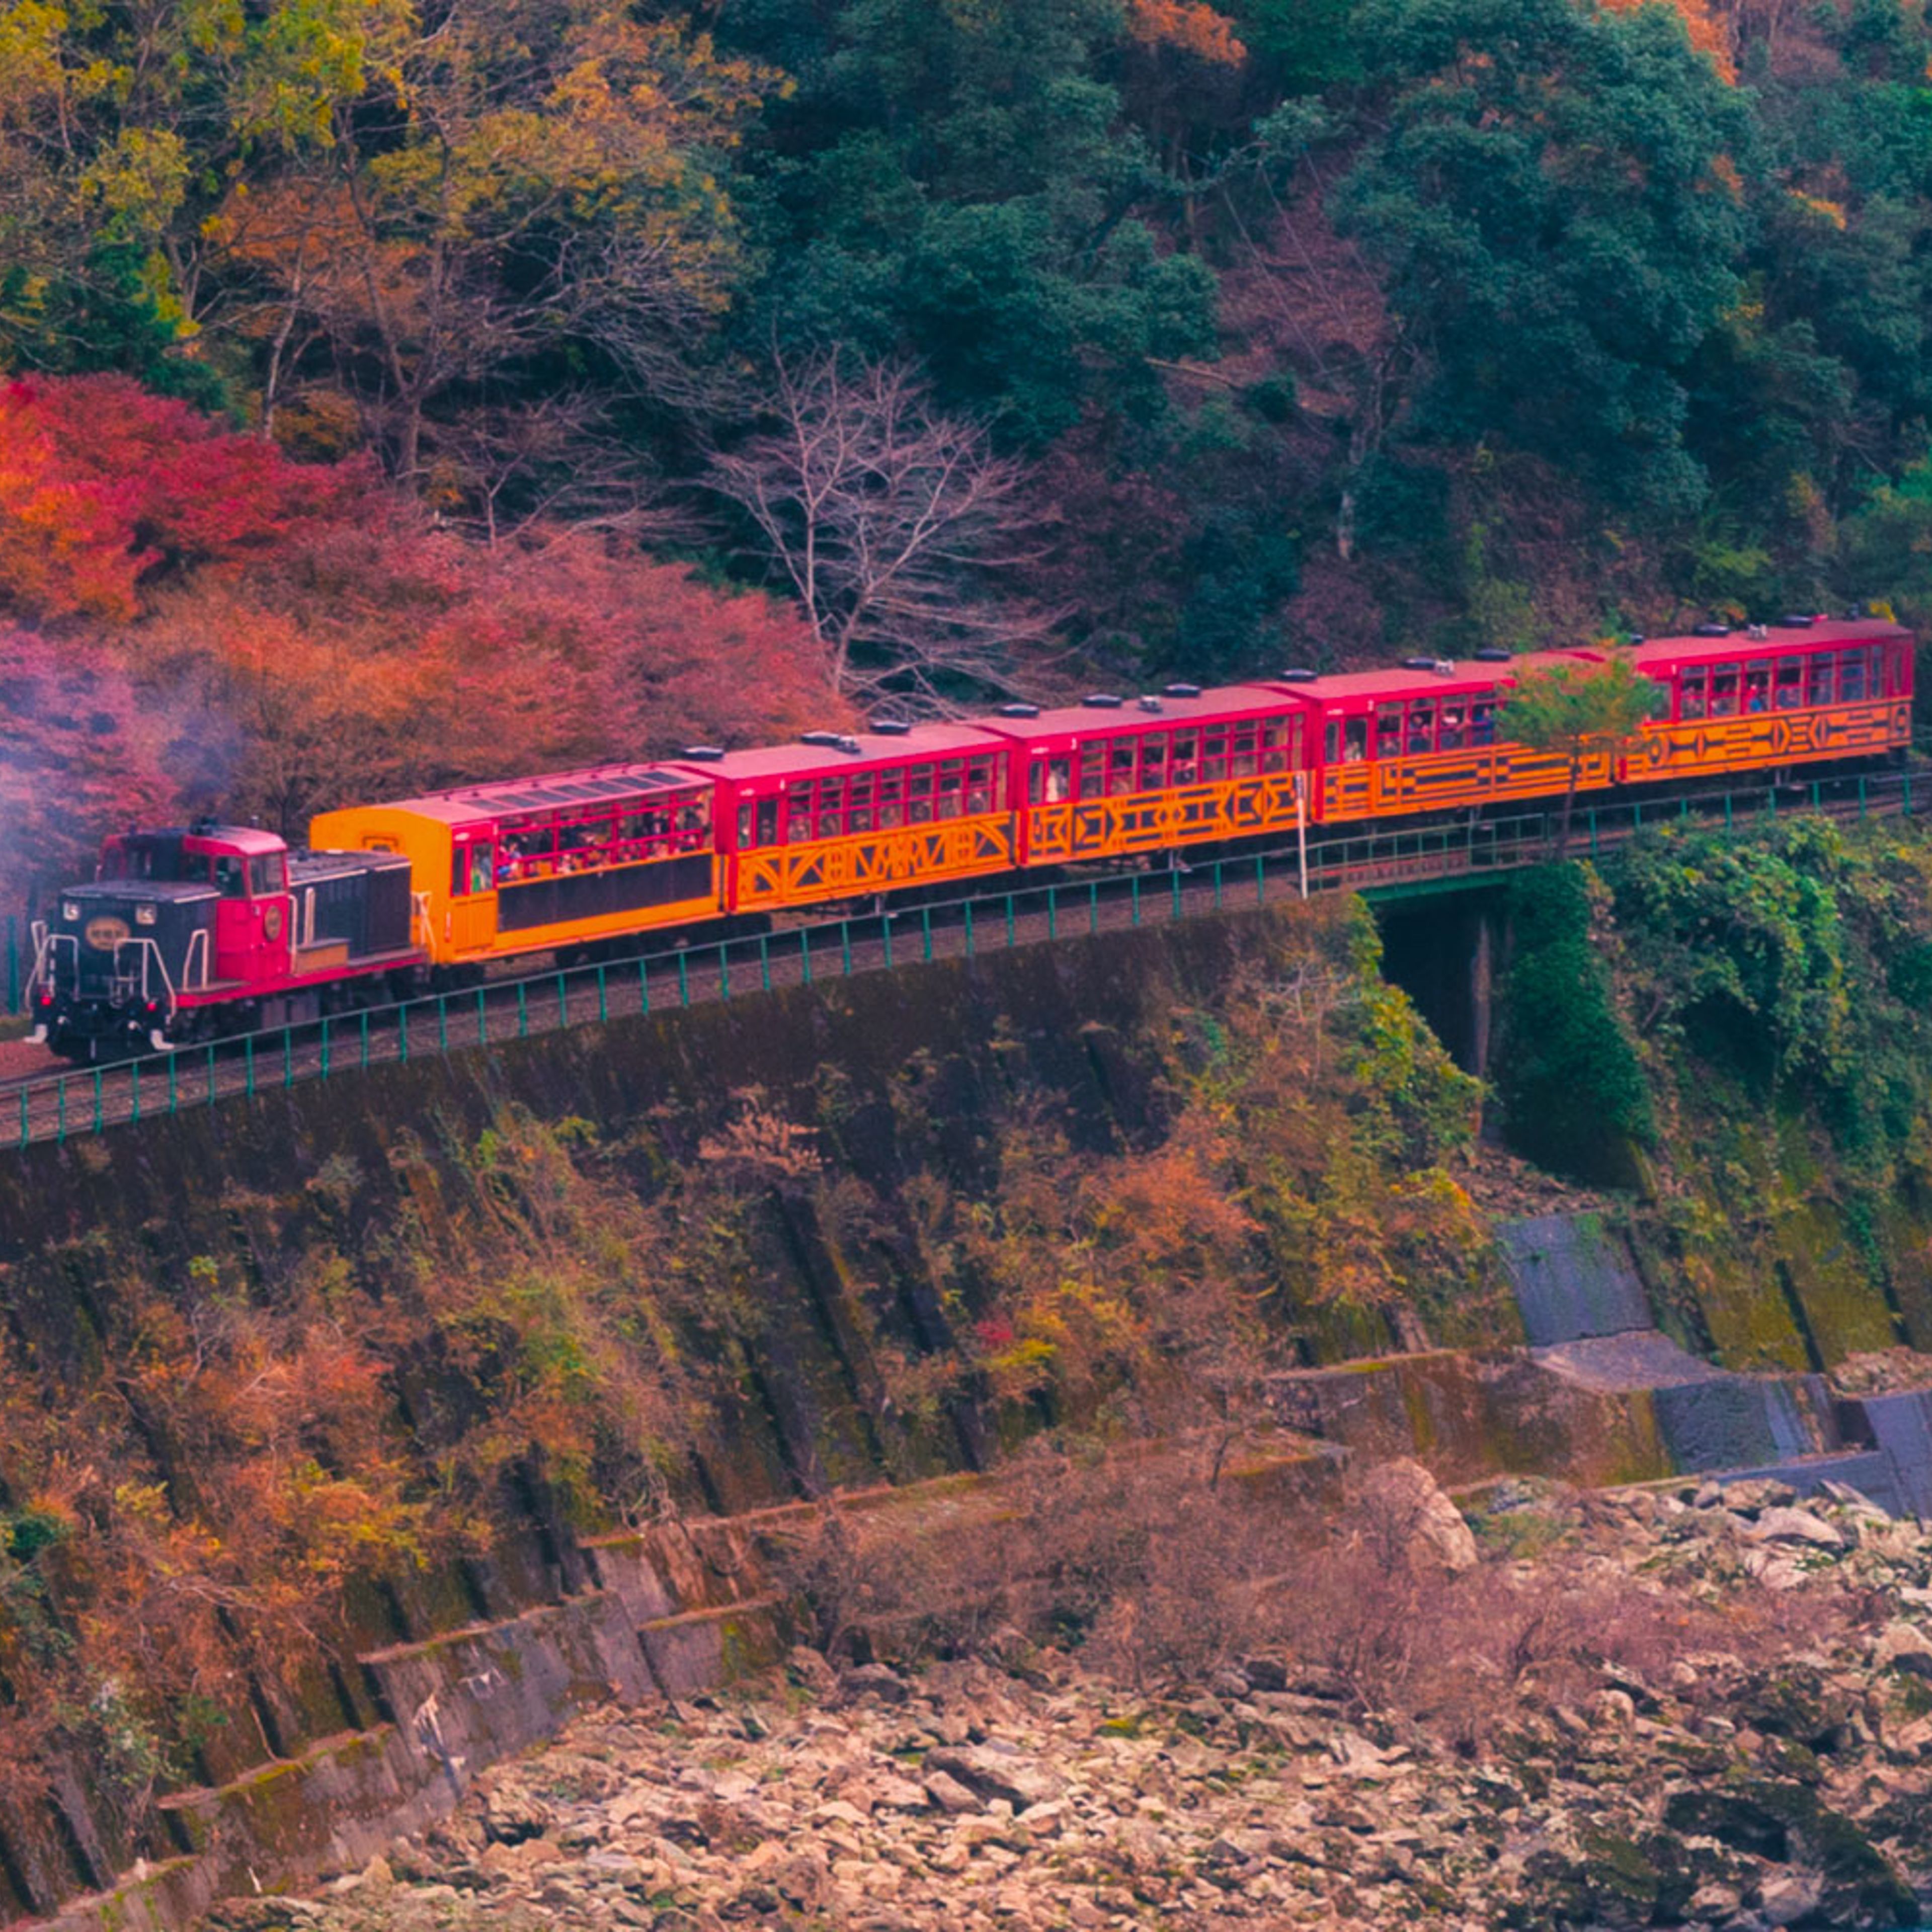 Train travel in Japan